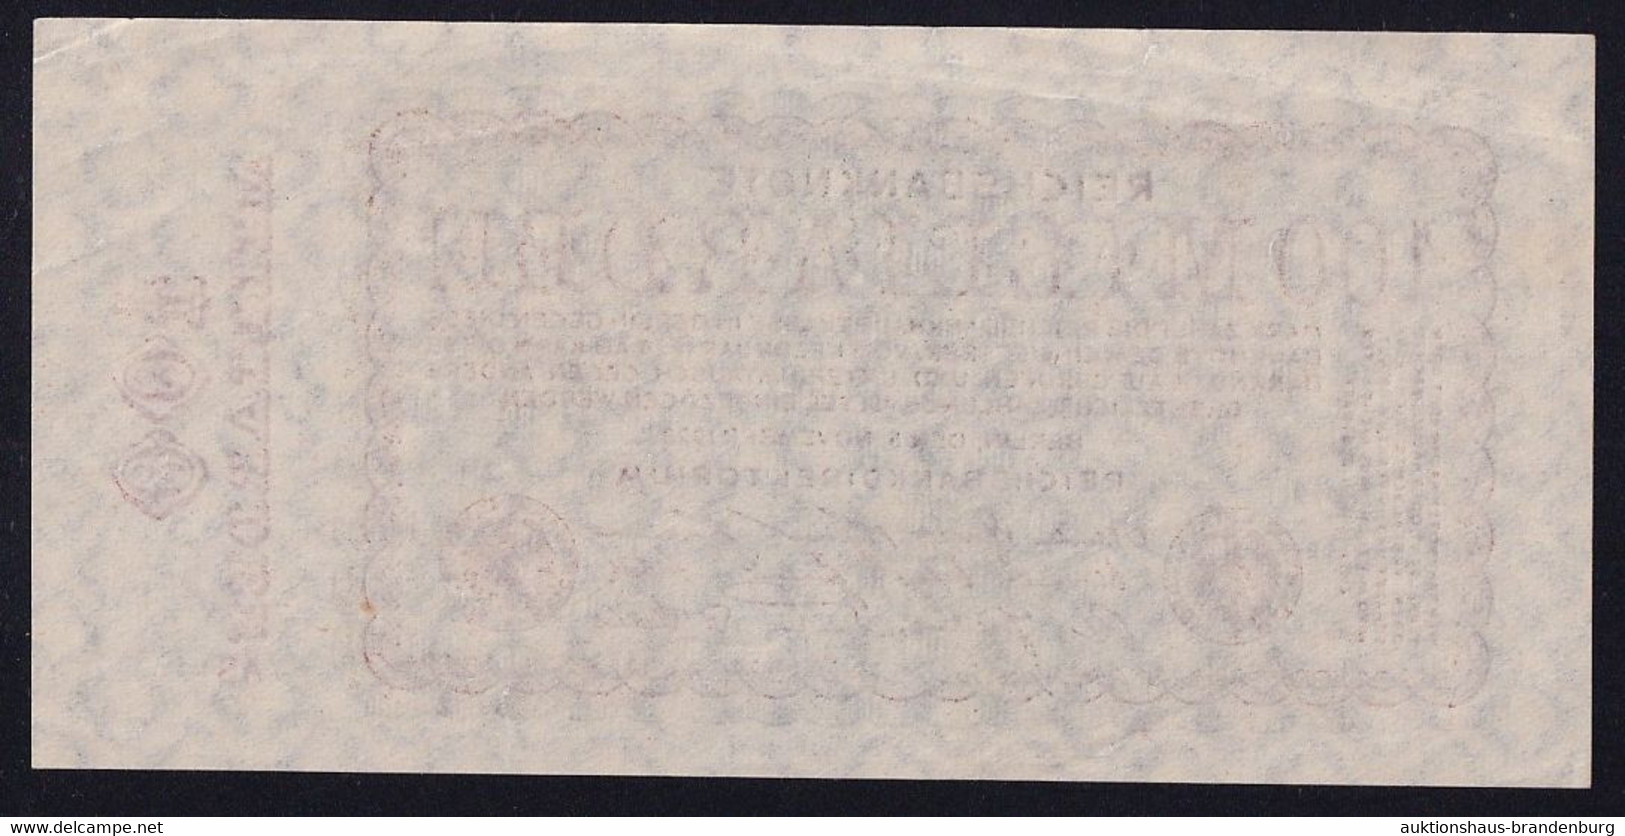 100 Milliarden Mark 5.11.1923 - FZ AS - Reichsbank (DEU-161a) - 100 Miljard Mark